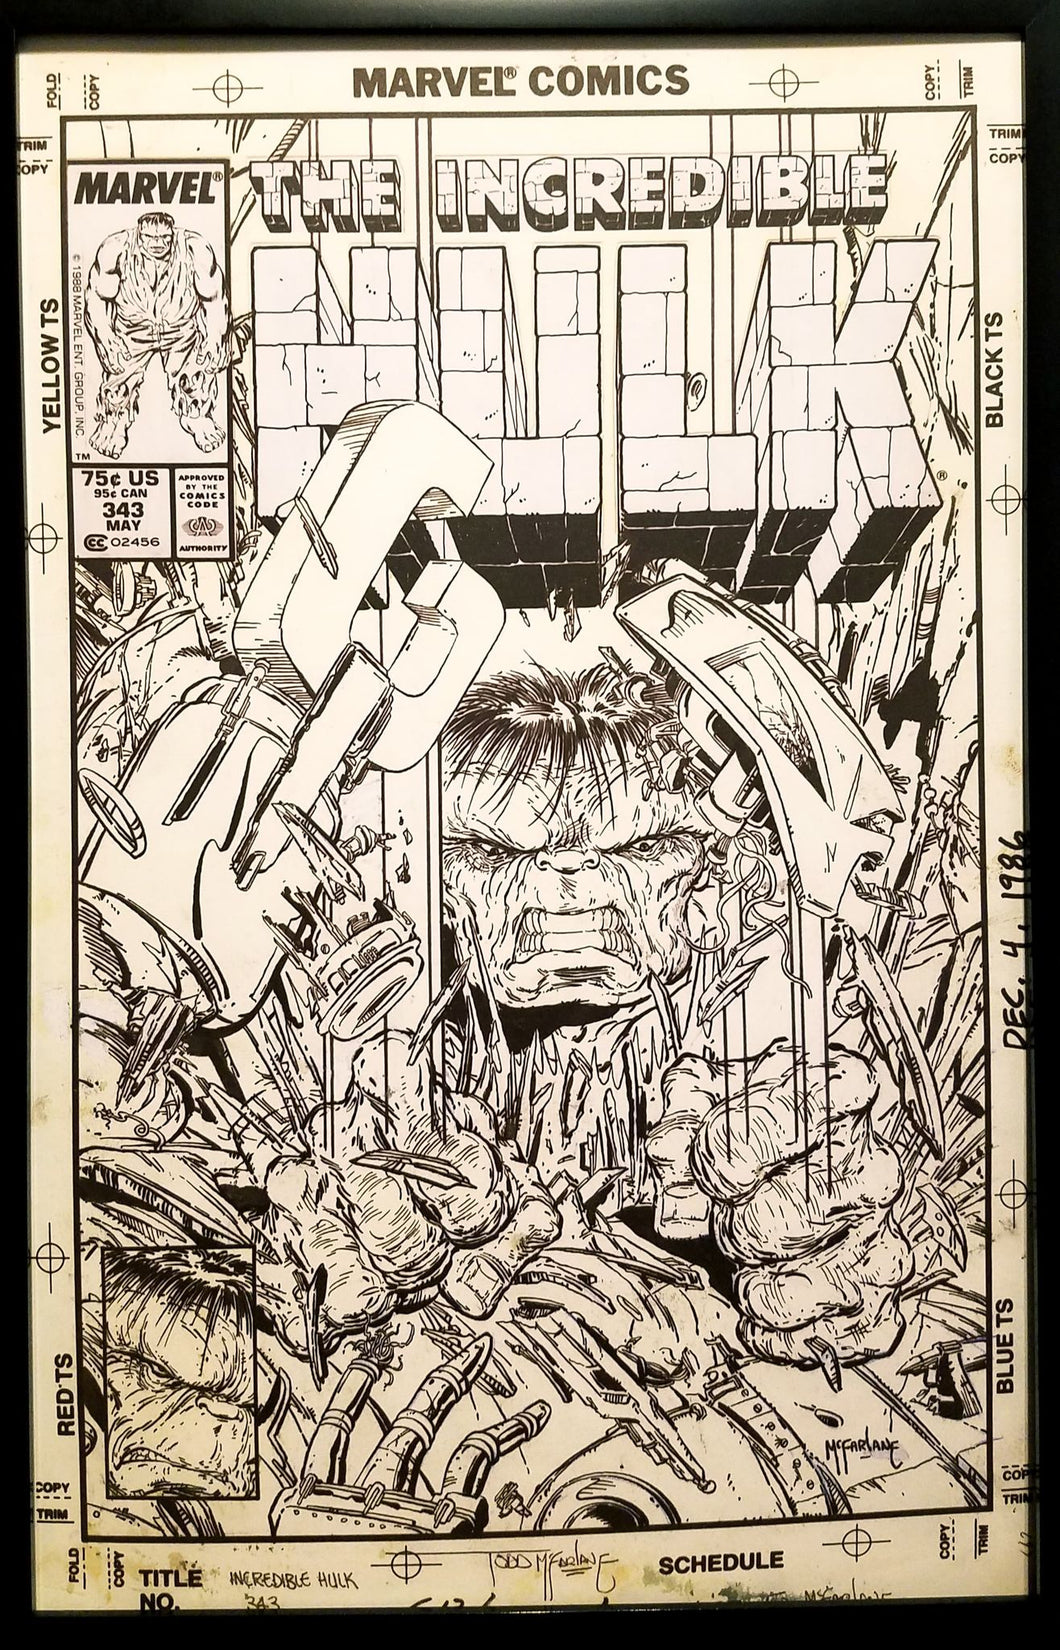 Incredible Hulk #343 Todd McFarlane 11x17 FRAMED Original Art Poster Marvel Comics